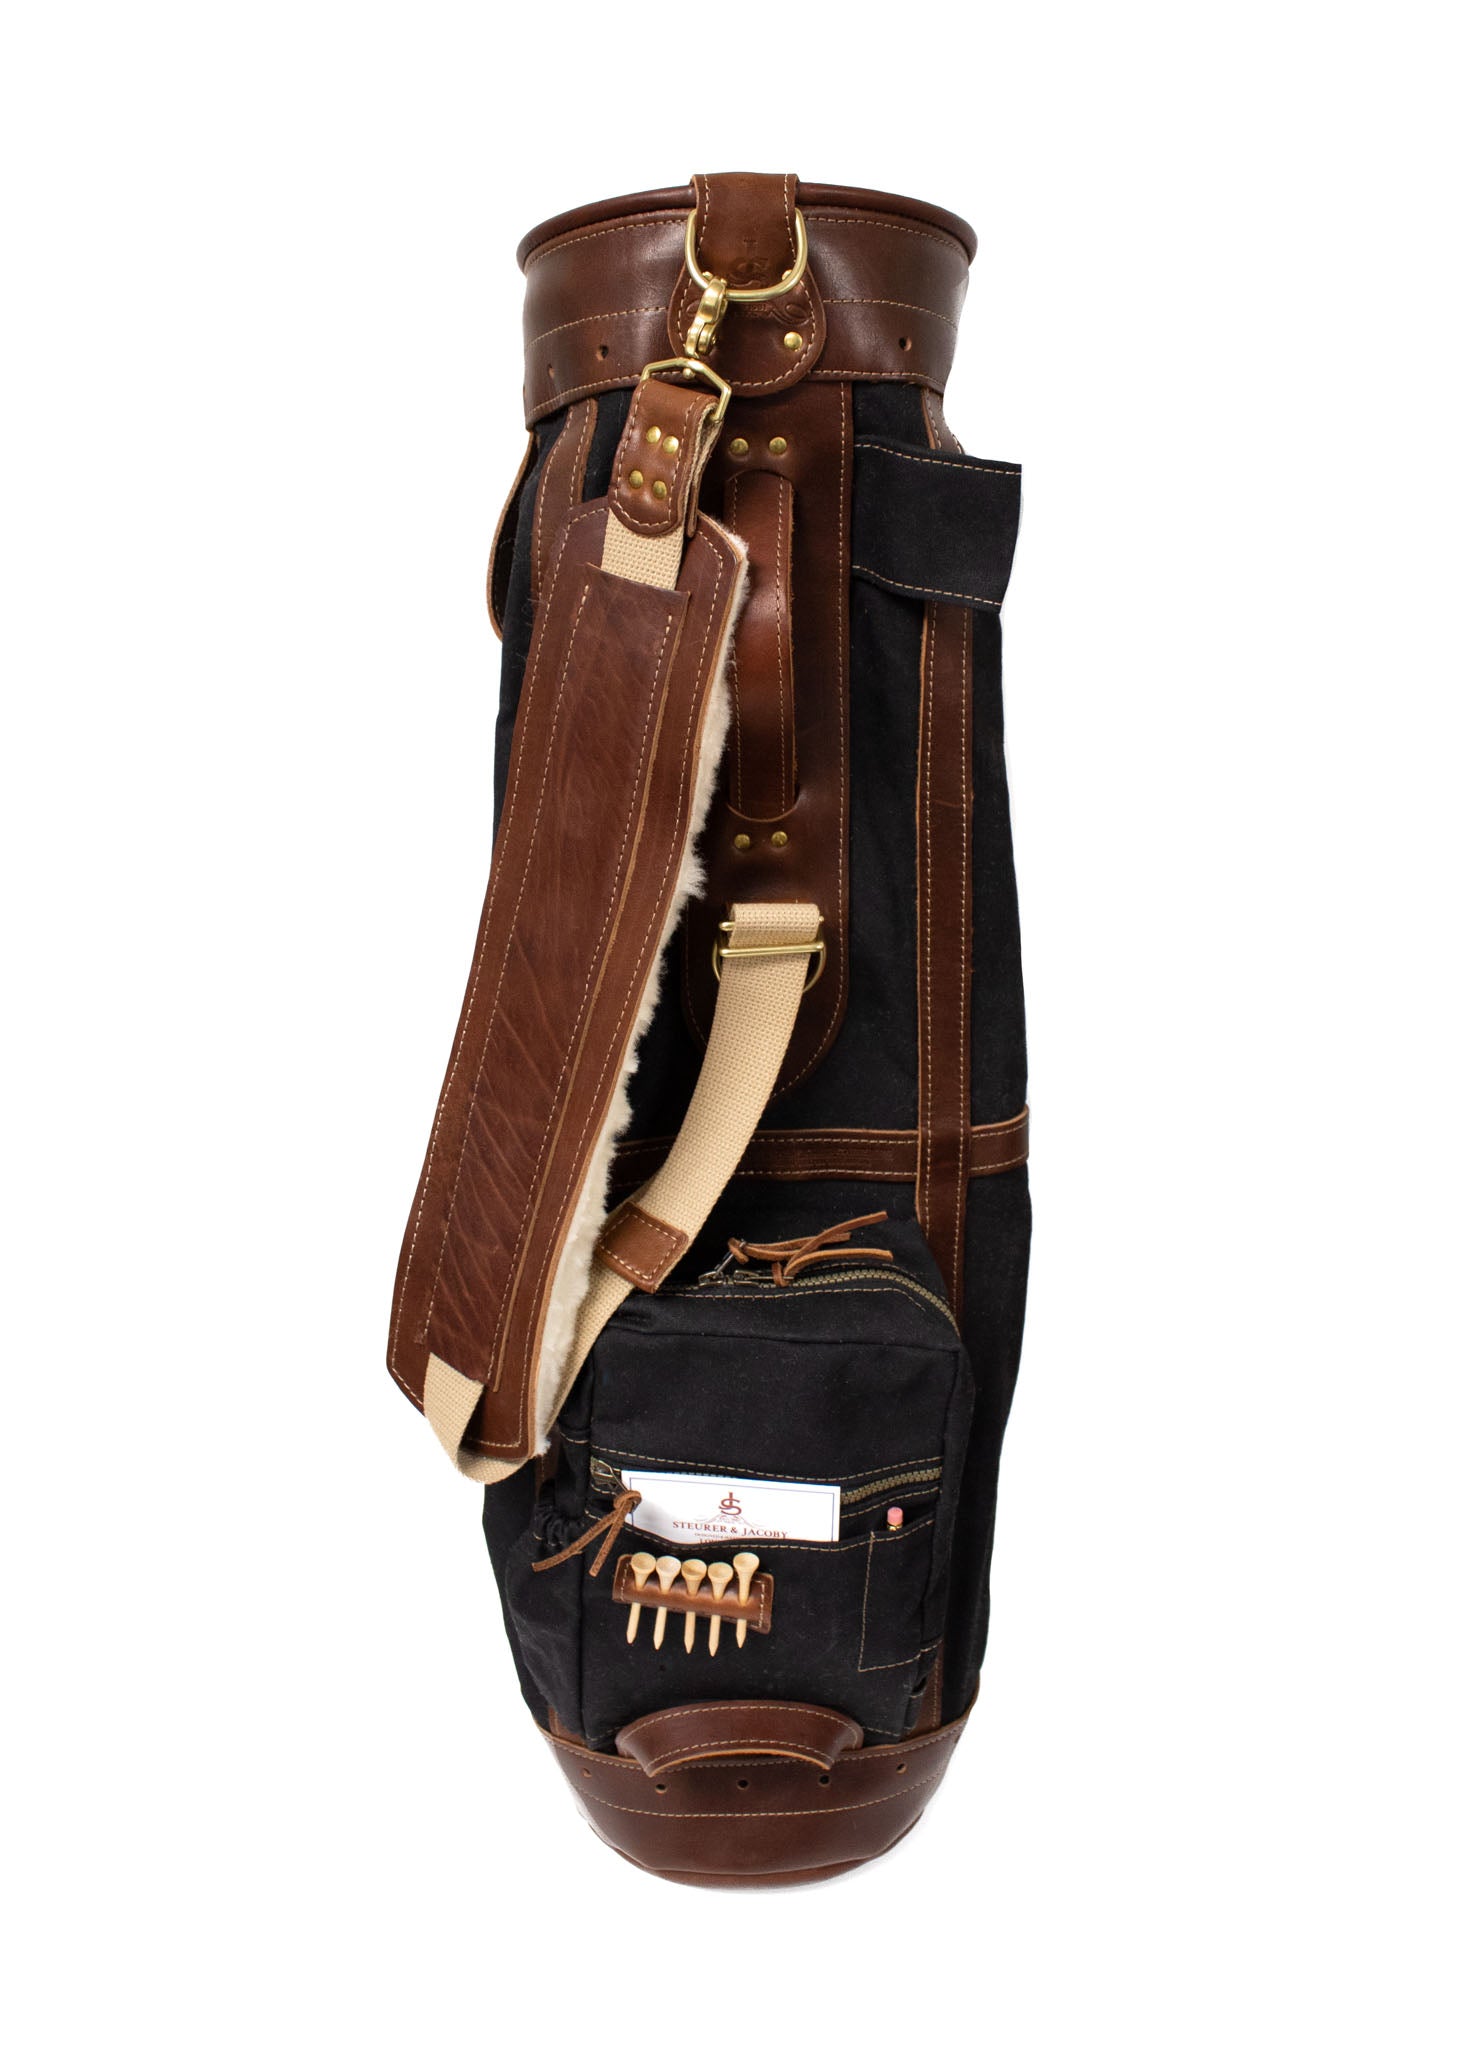 Caddy Style Golf Bag- Burgundy